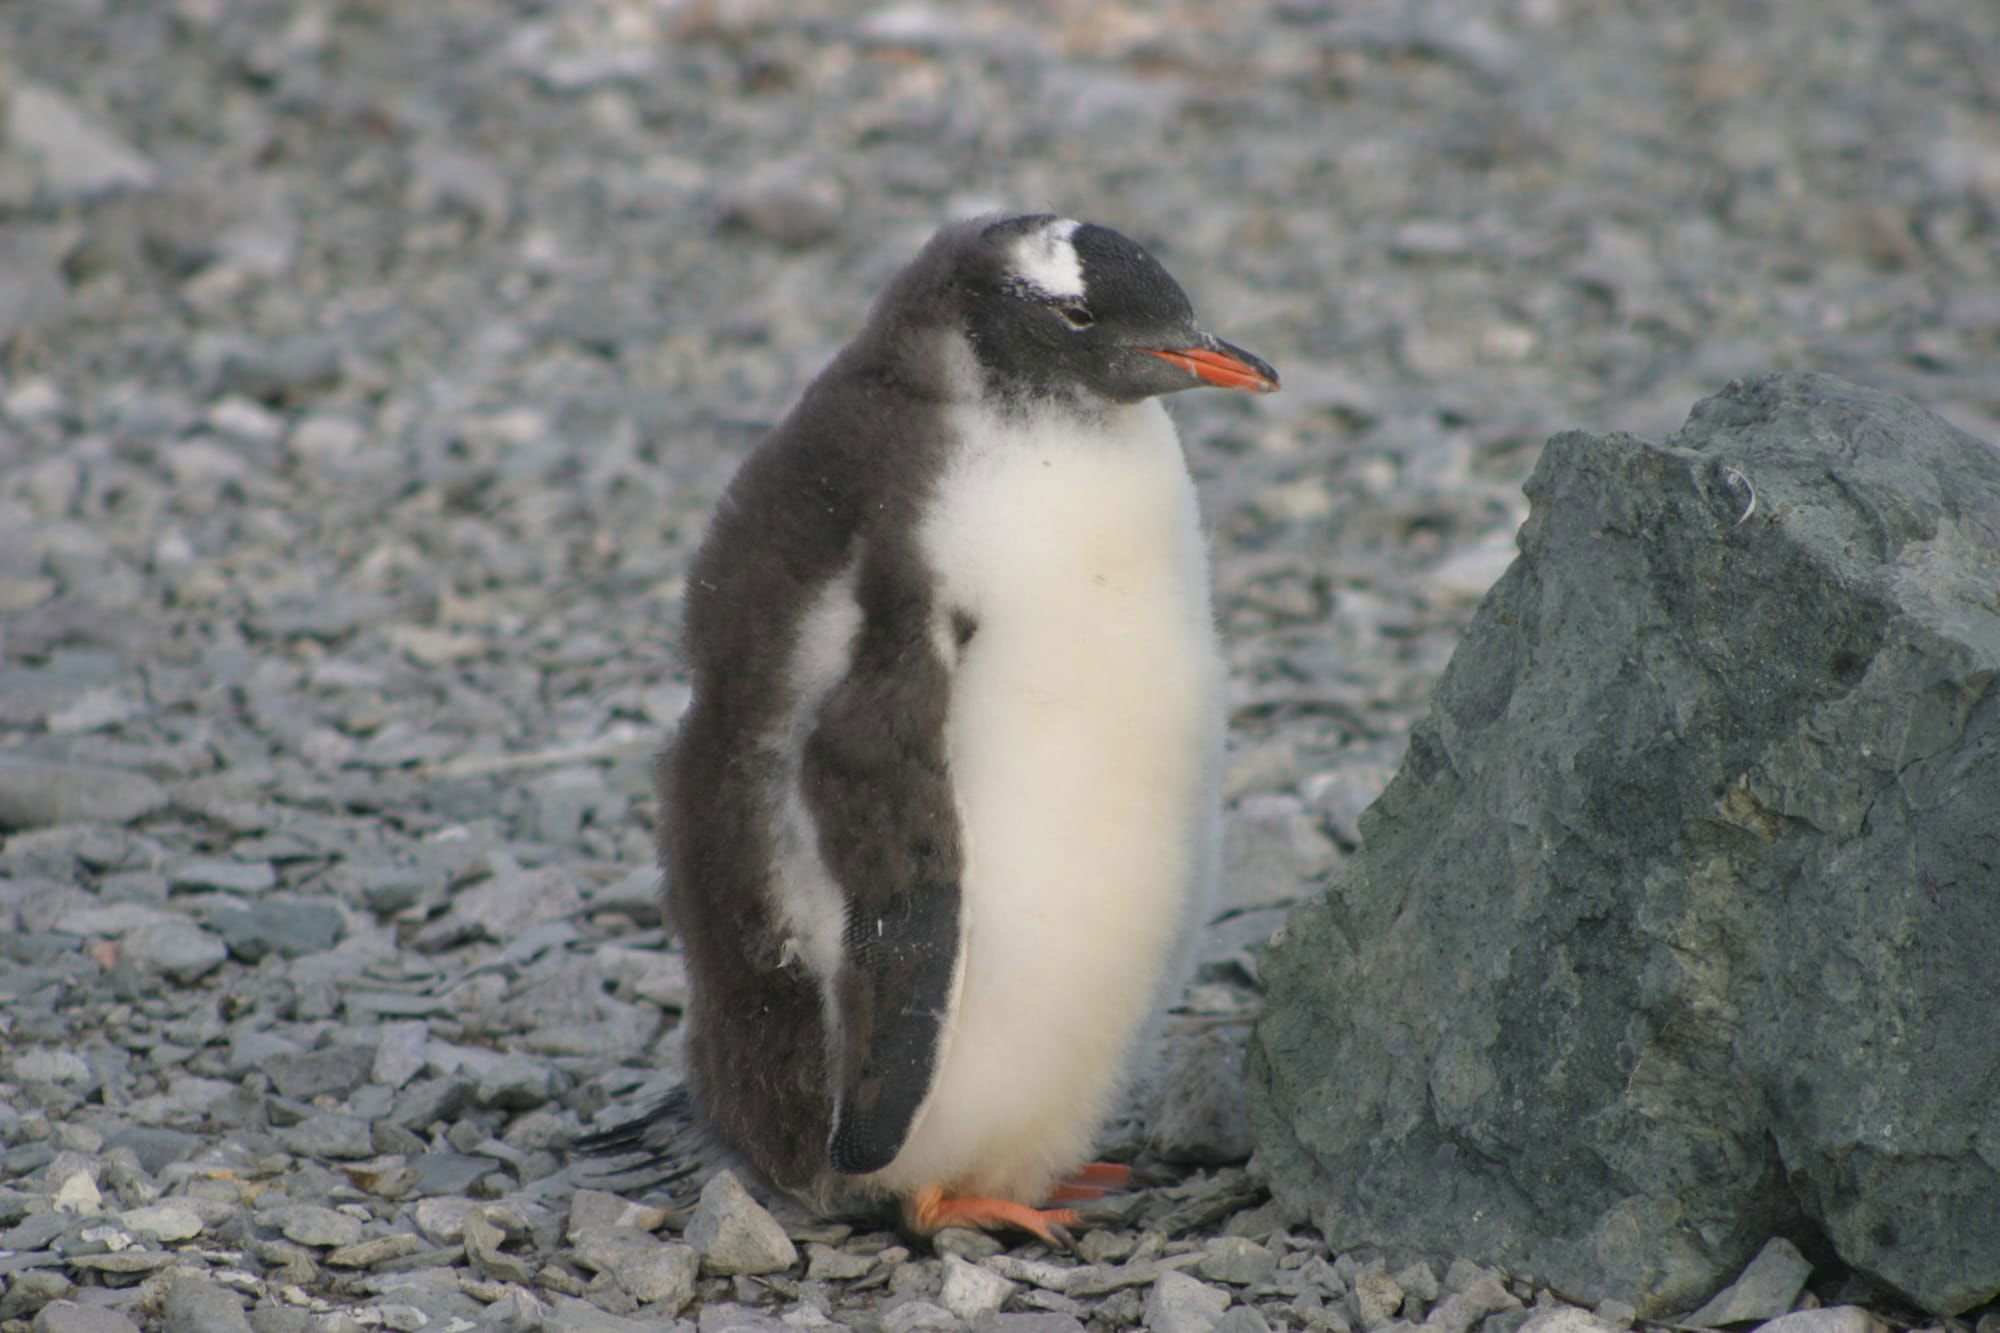 Gentoo Penguin chick